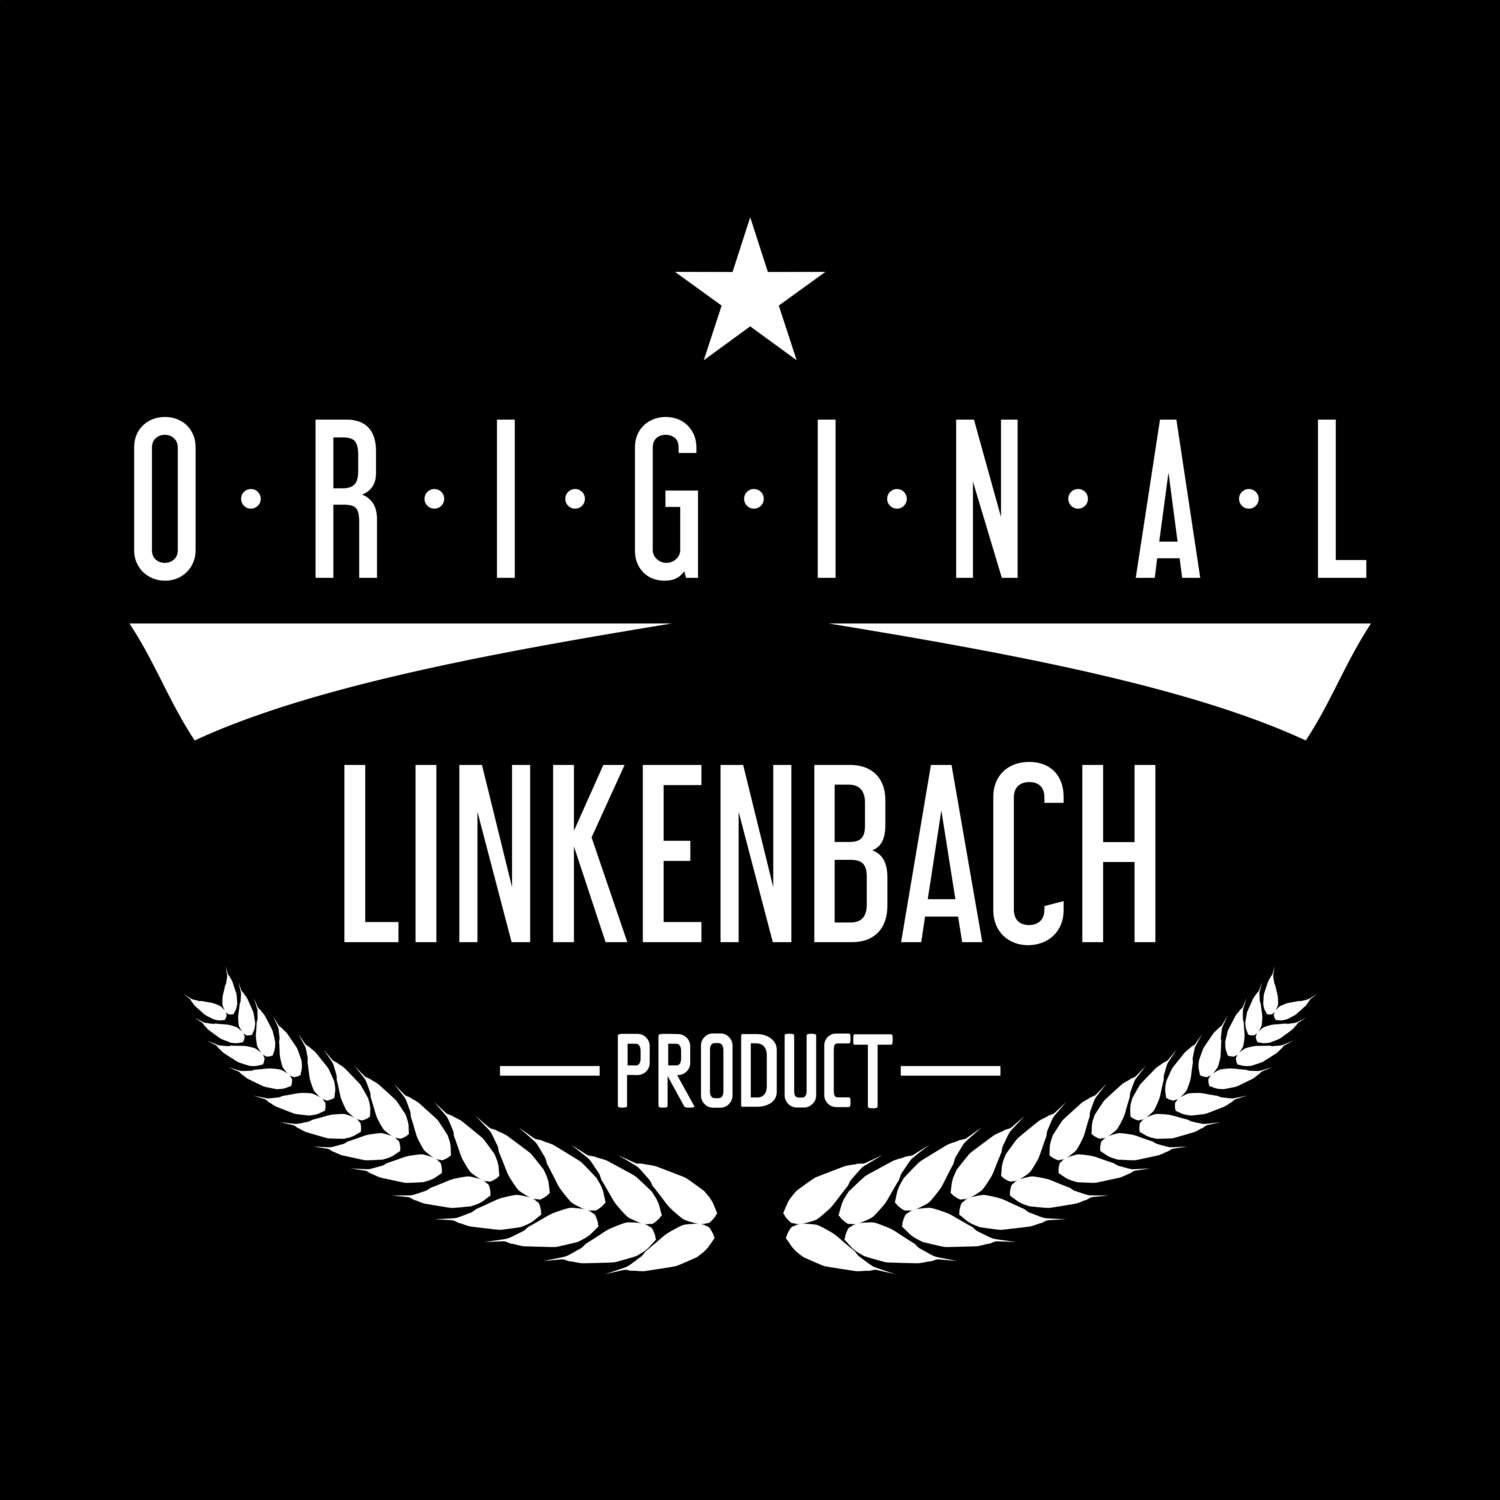 Linkenbach T-Shirt »Original Product«